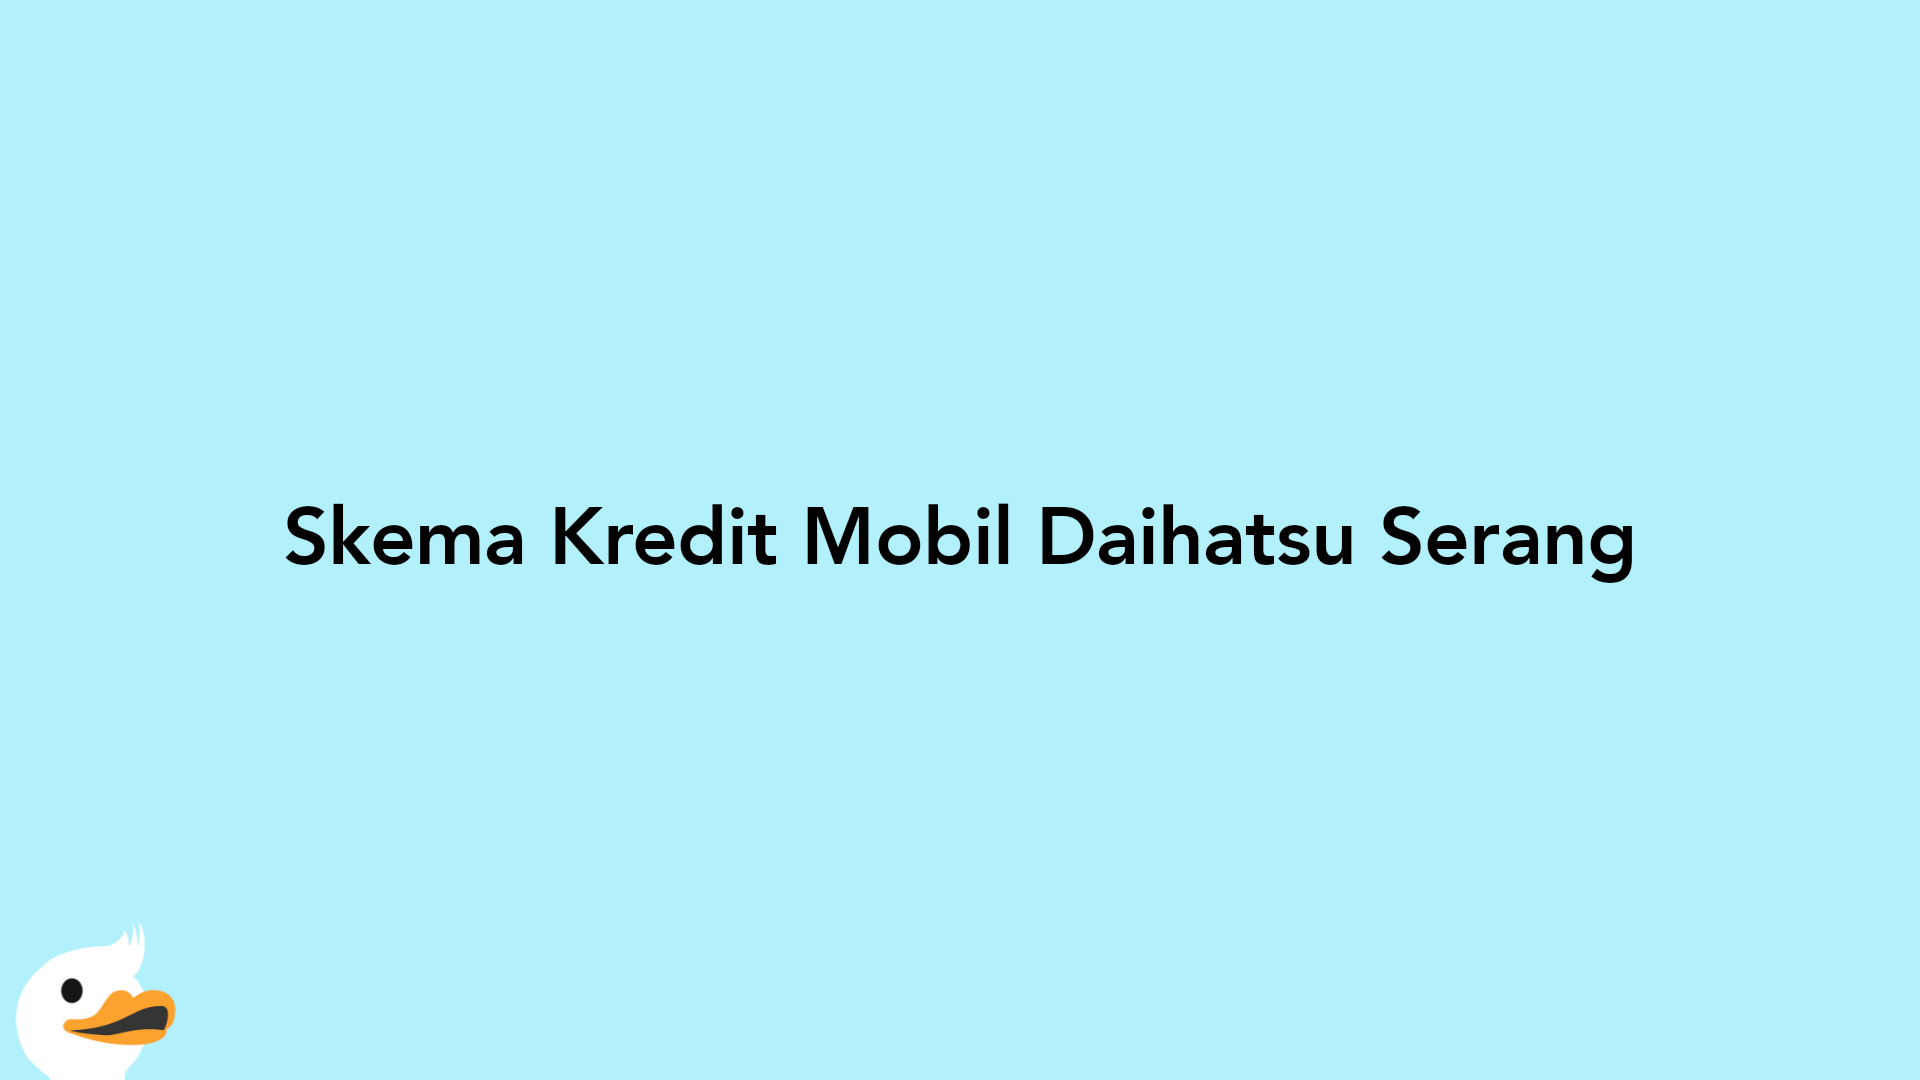 Skema Kredit Mobil Daihatsu Serang